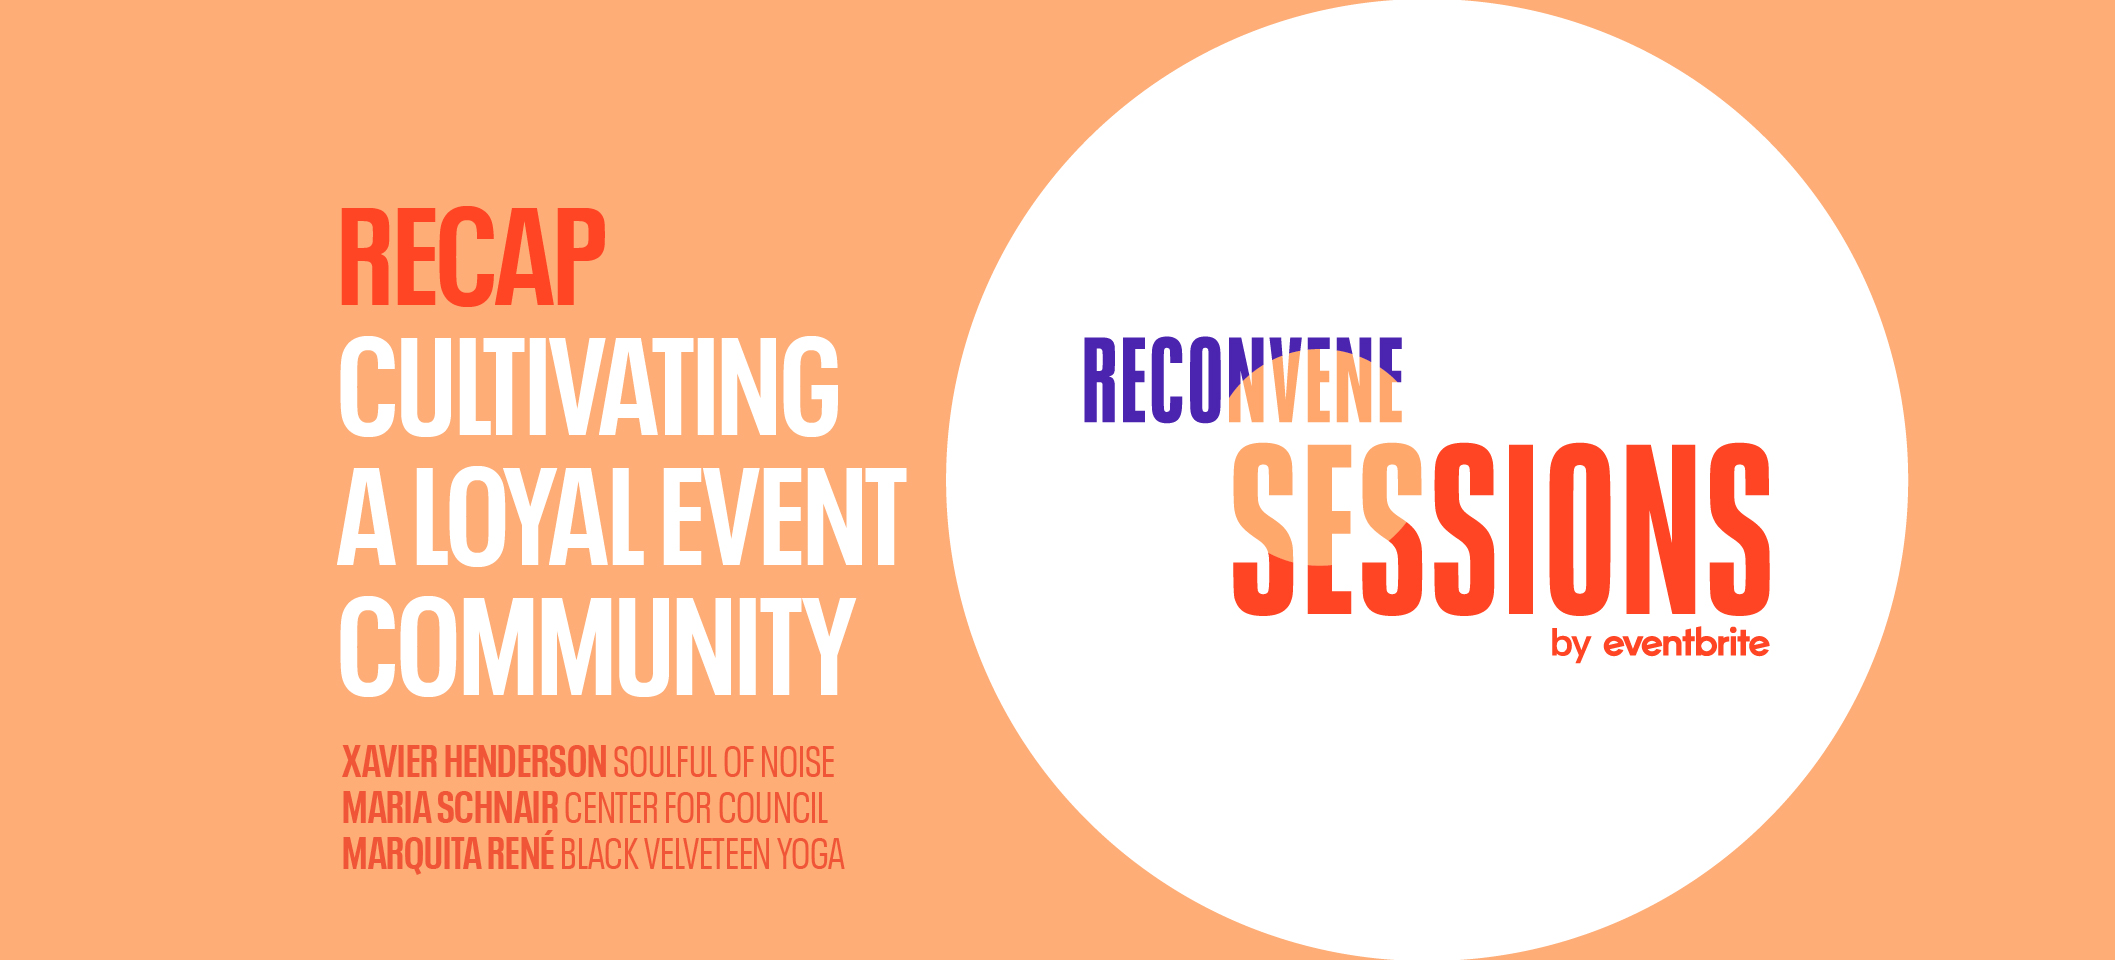 RECONVENE Squad Goals: Cultivating a Loyal Event Community